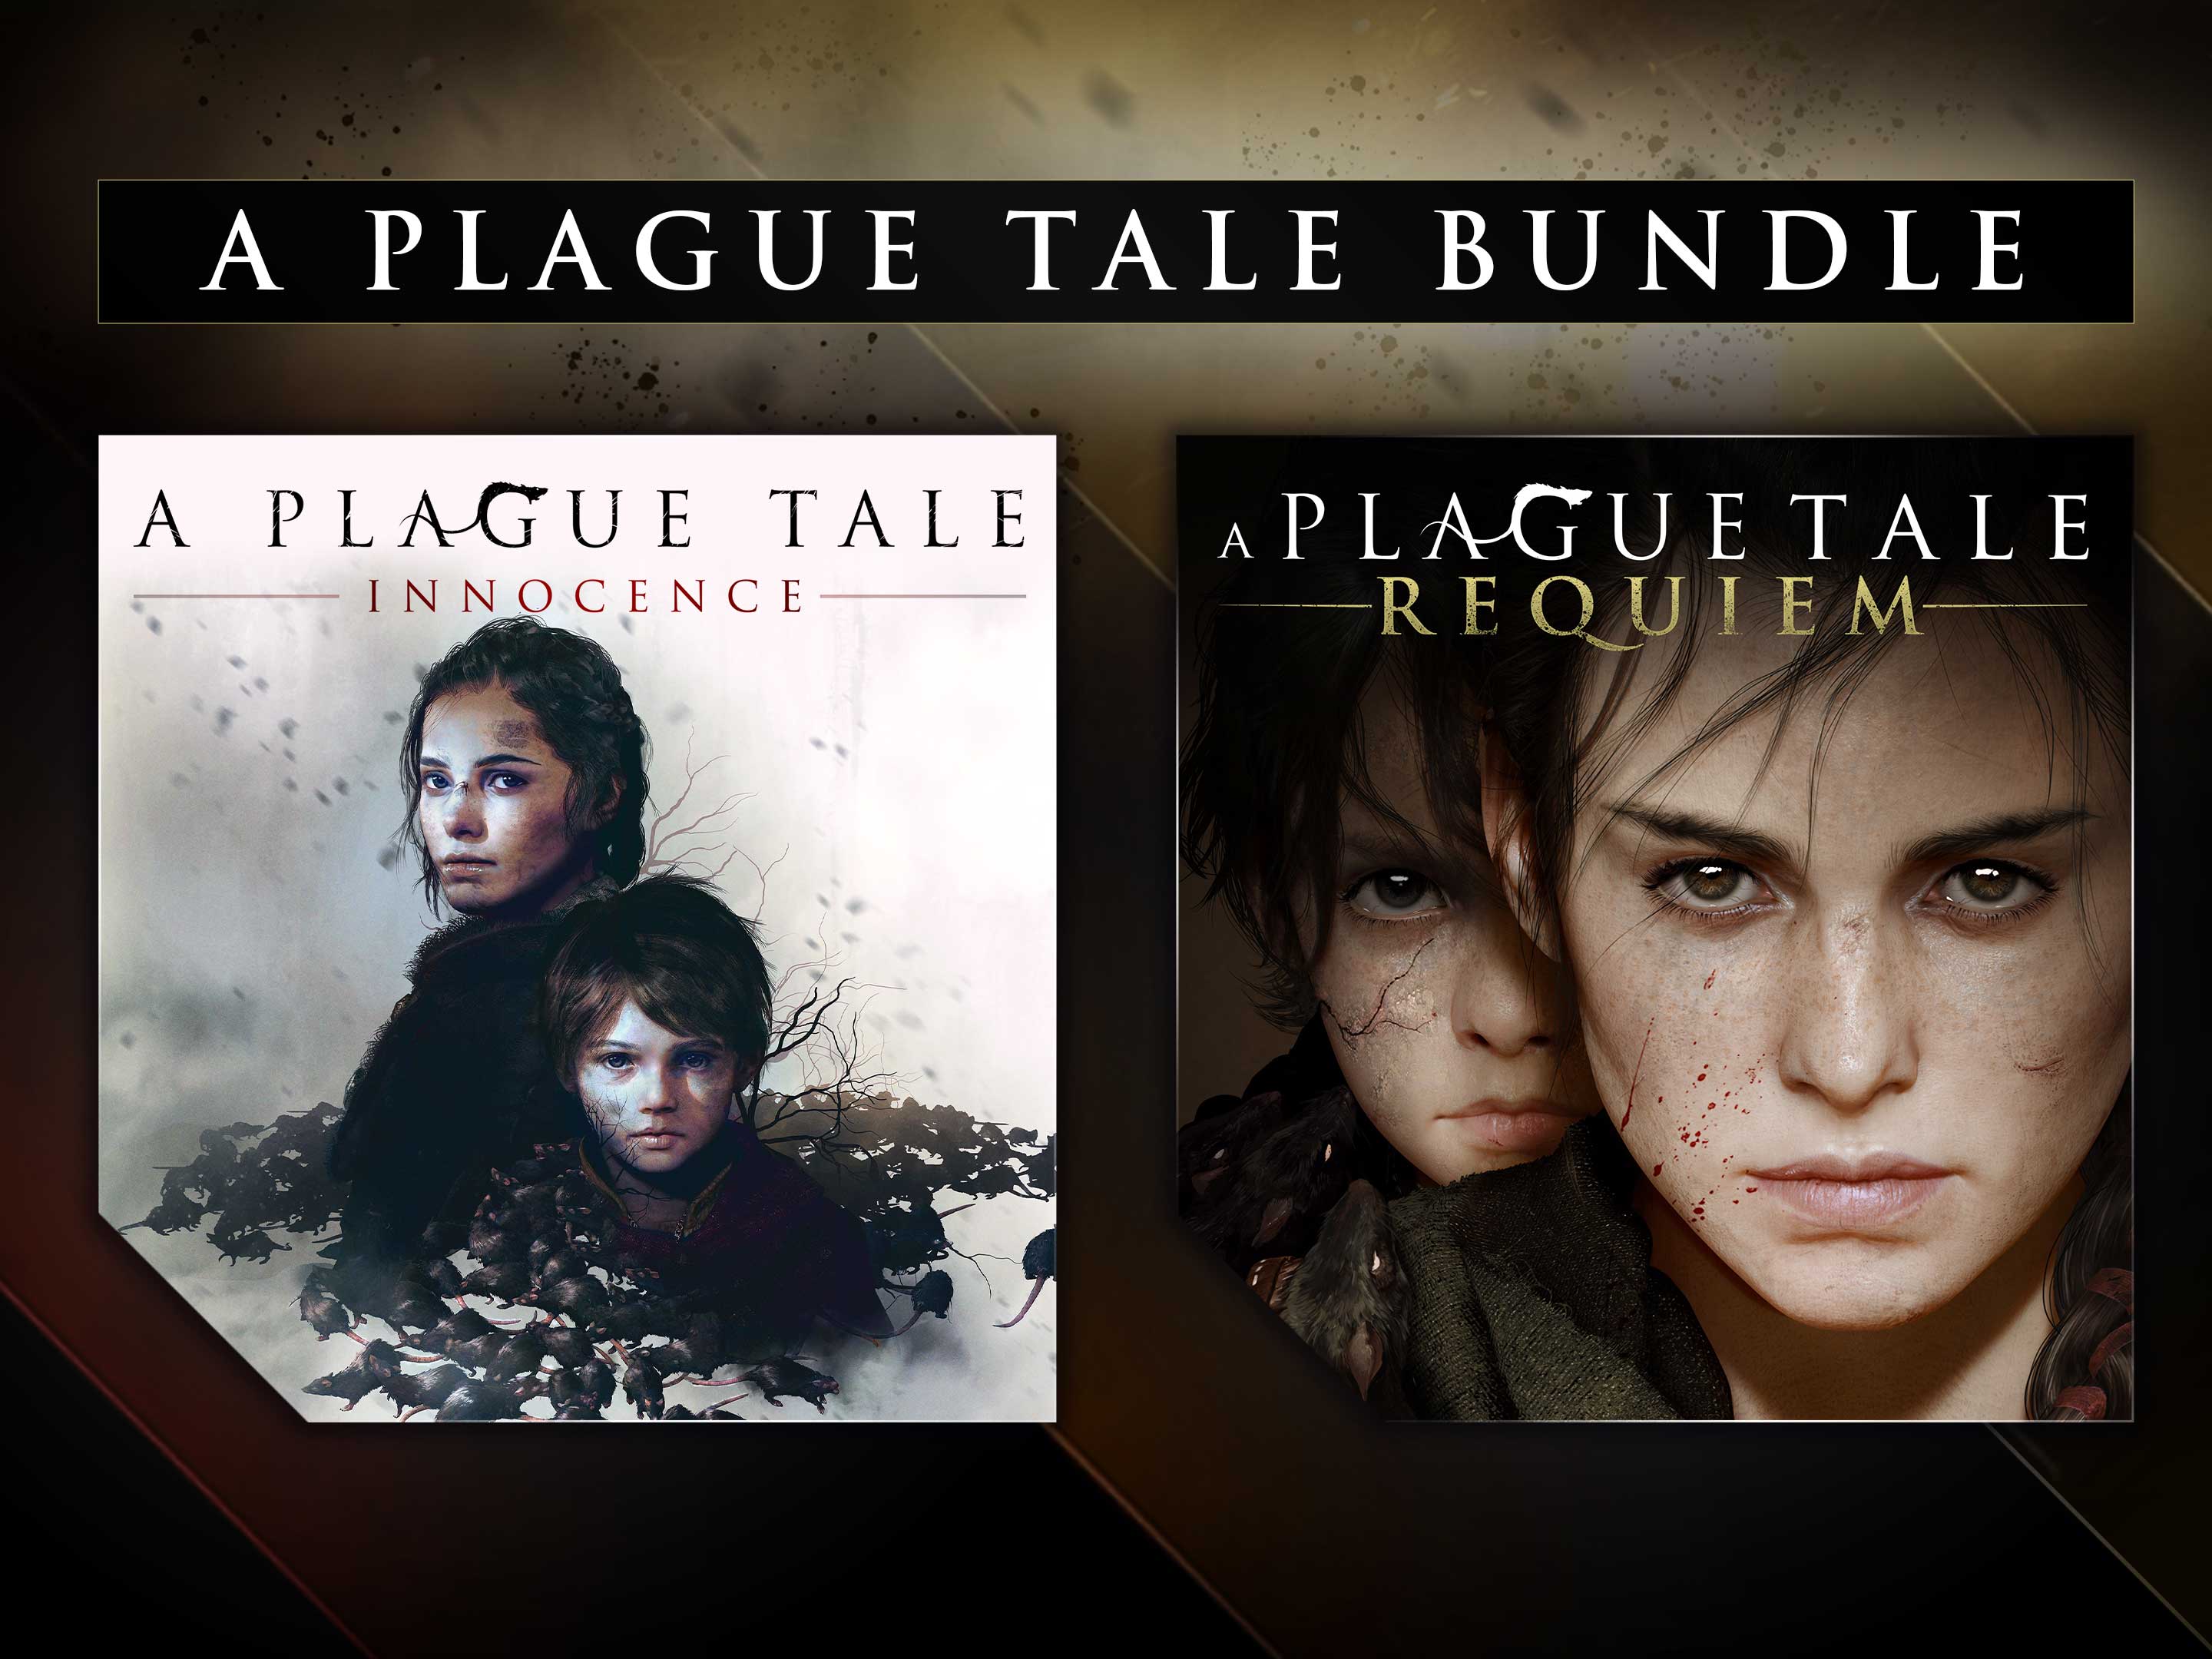 A Plague Tale: Requiem - Sony PlayStation 5 PS5 In Original